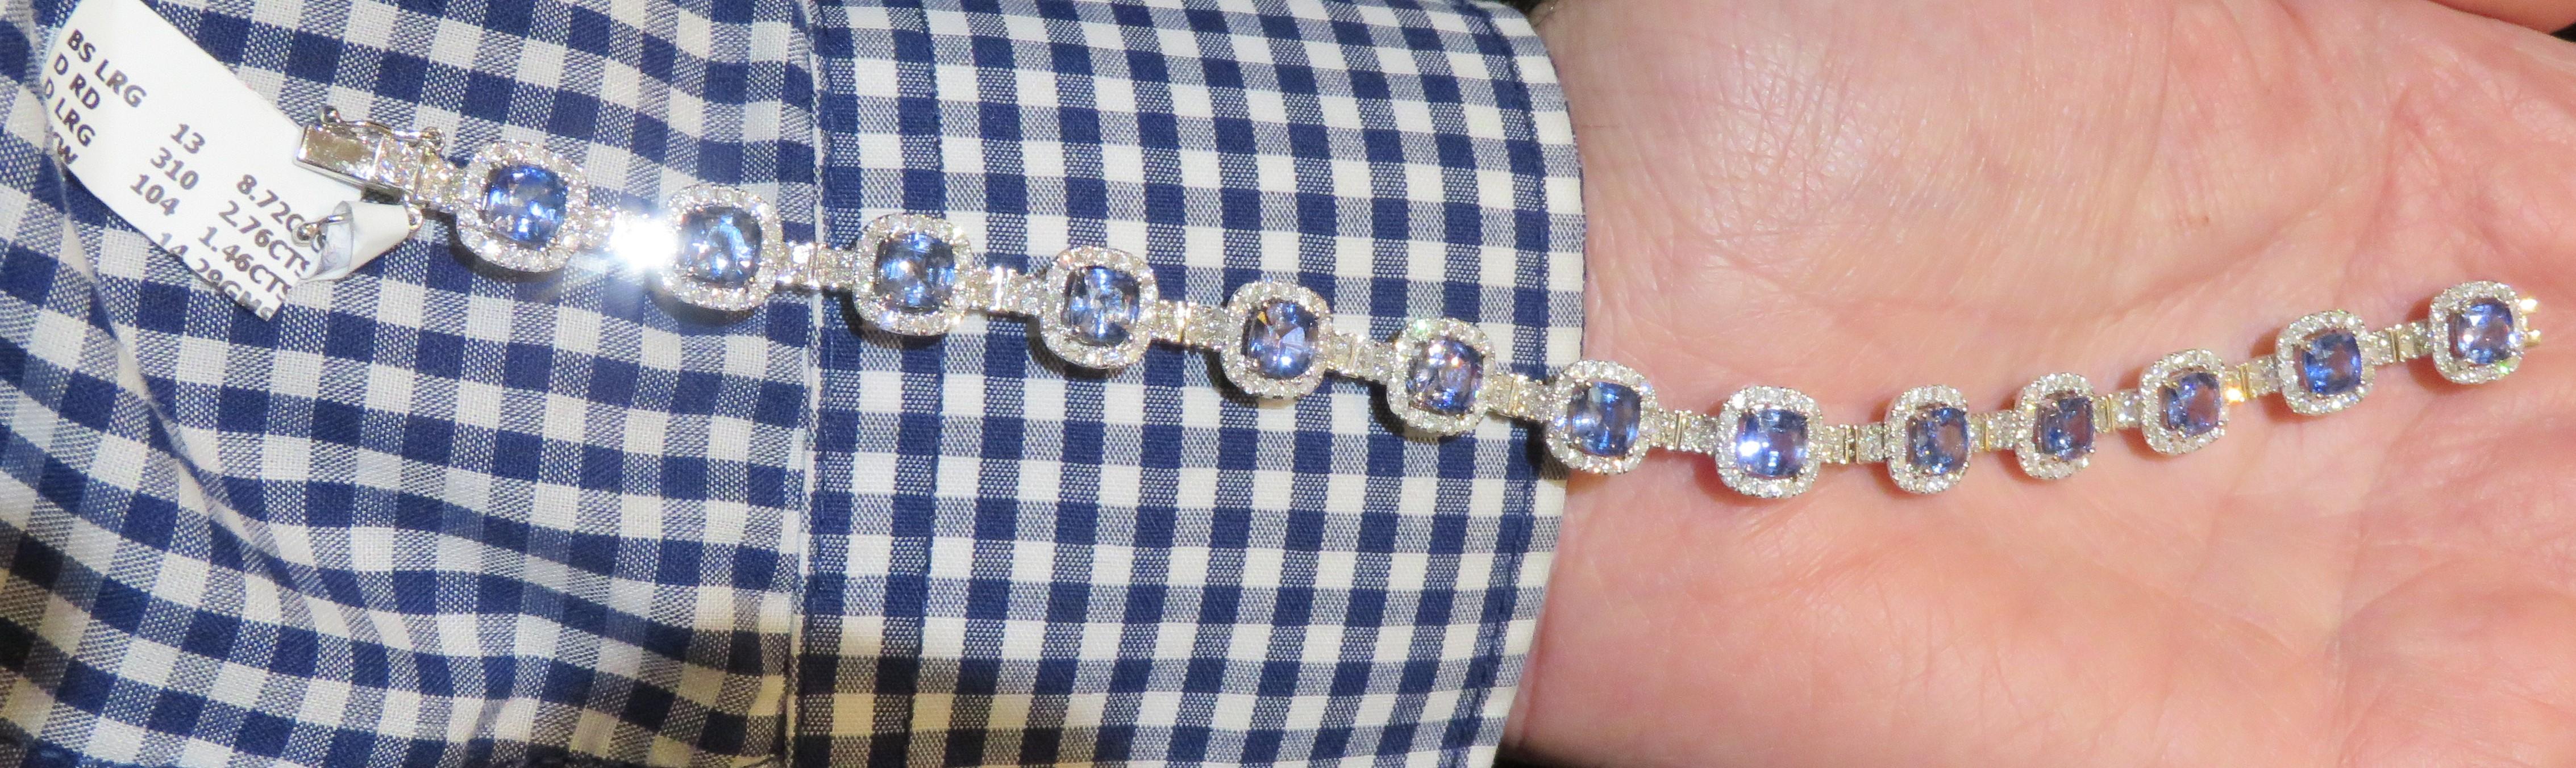 Mixed Cut Nwt $26, 900 18KT Gold Magnificent Rare 13 Ct Blue Sapphire Diamond Bracelet For Sale